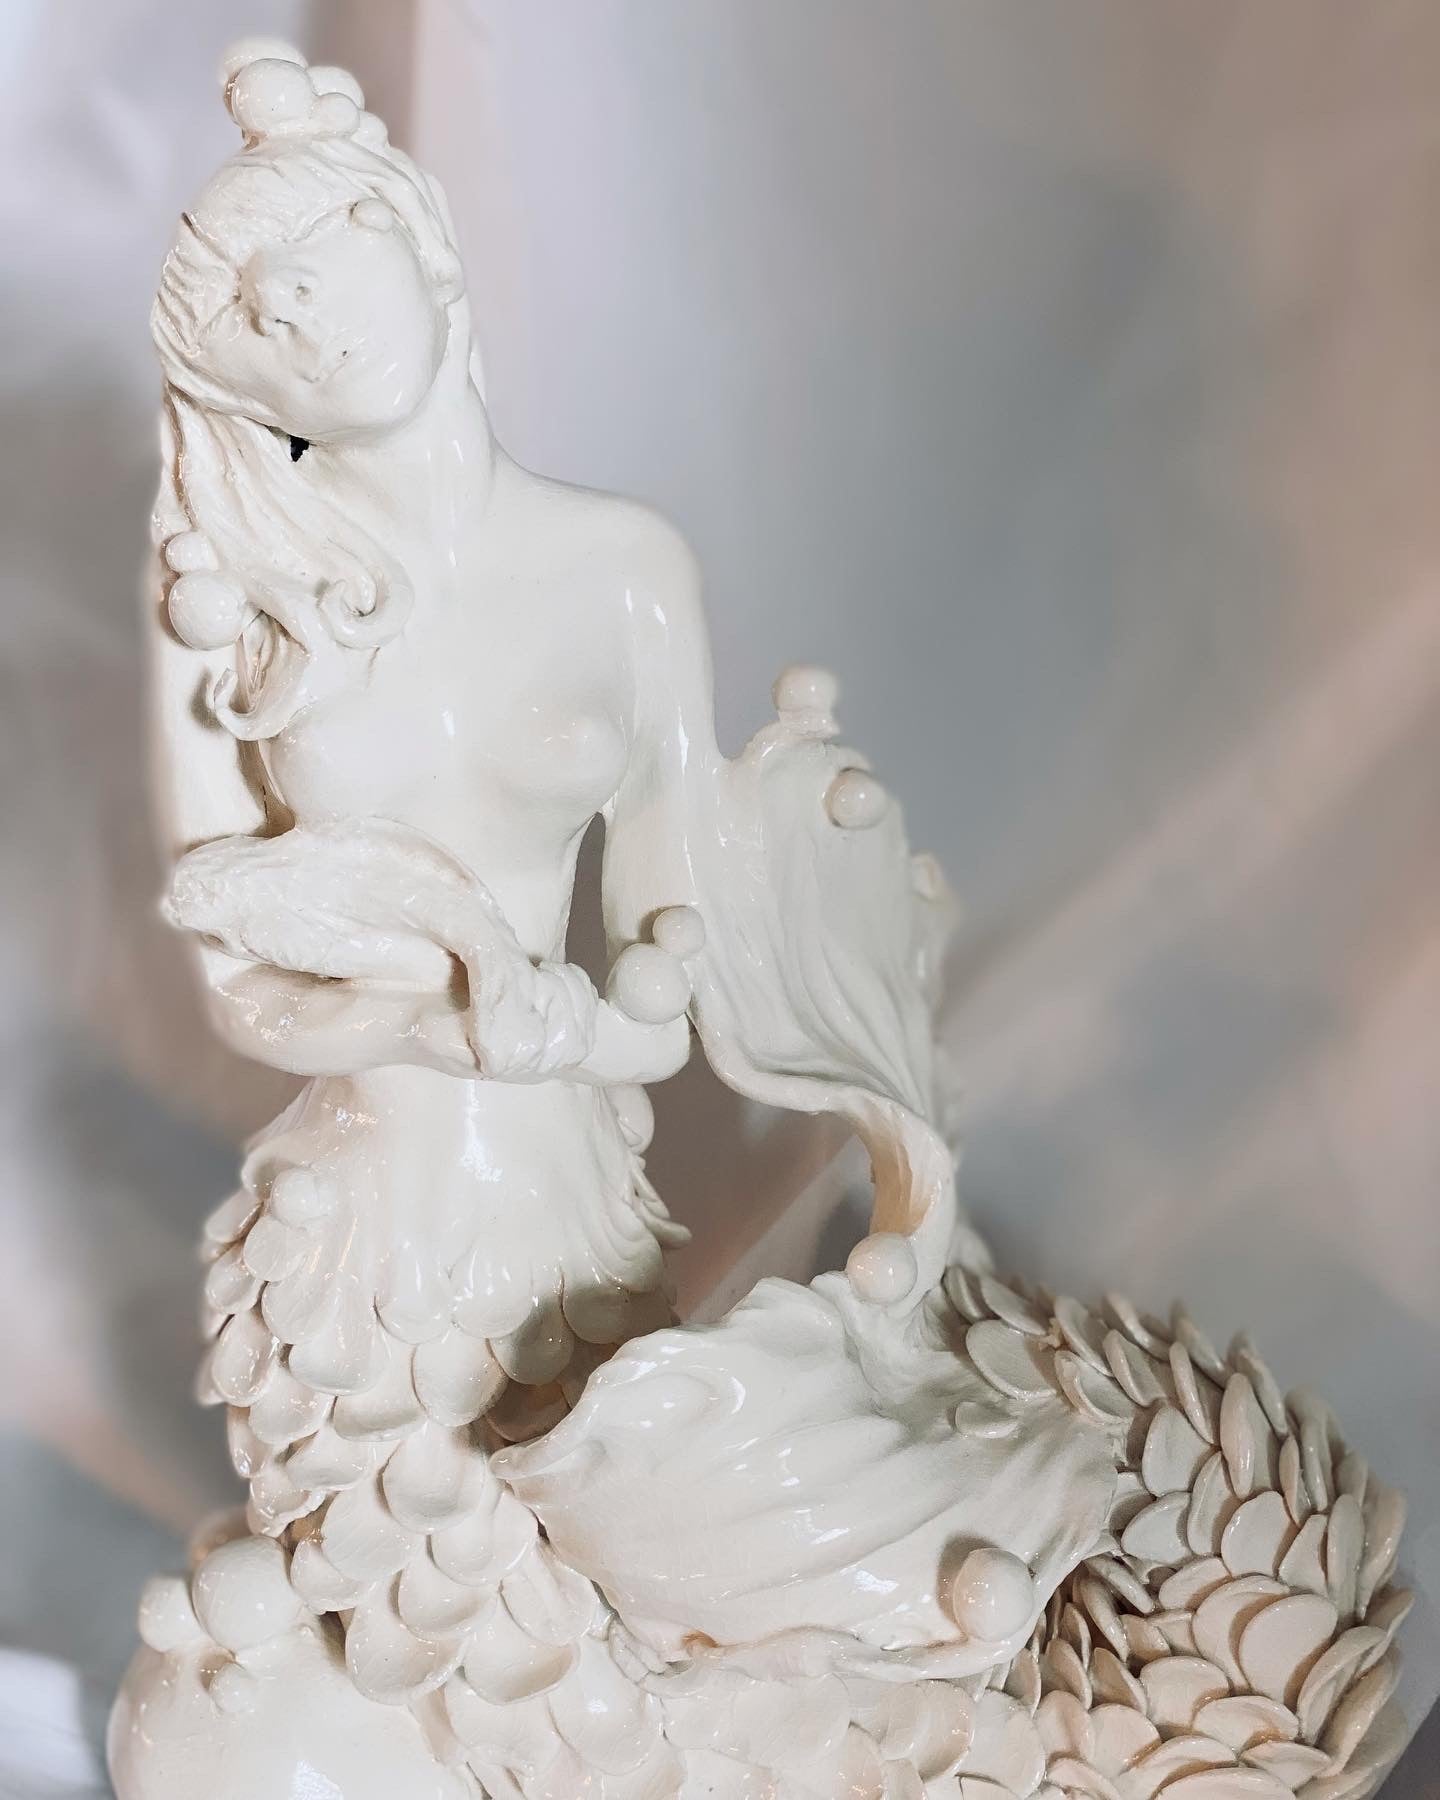 Mermaid - White Siren, by Linda Titow